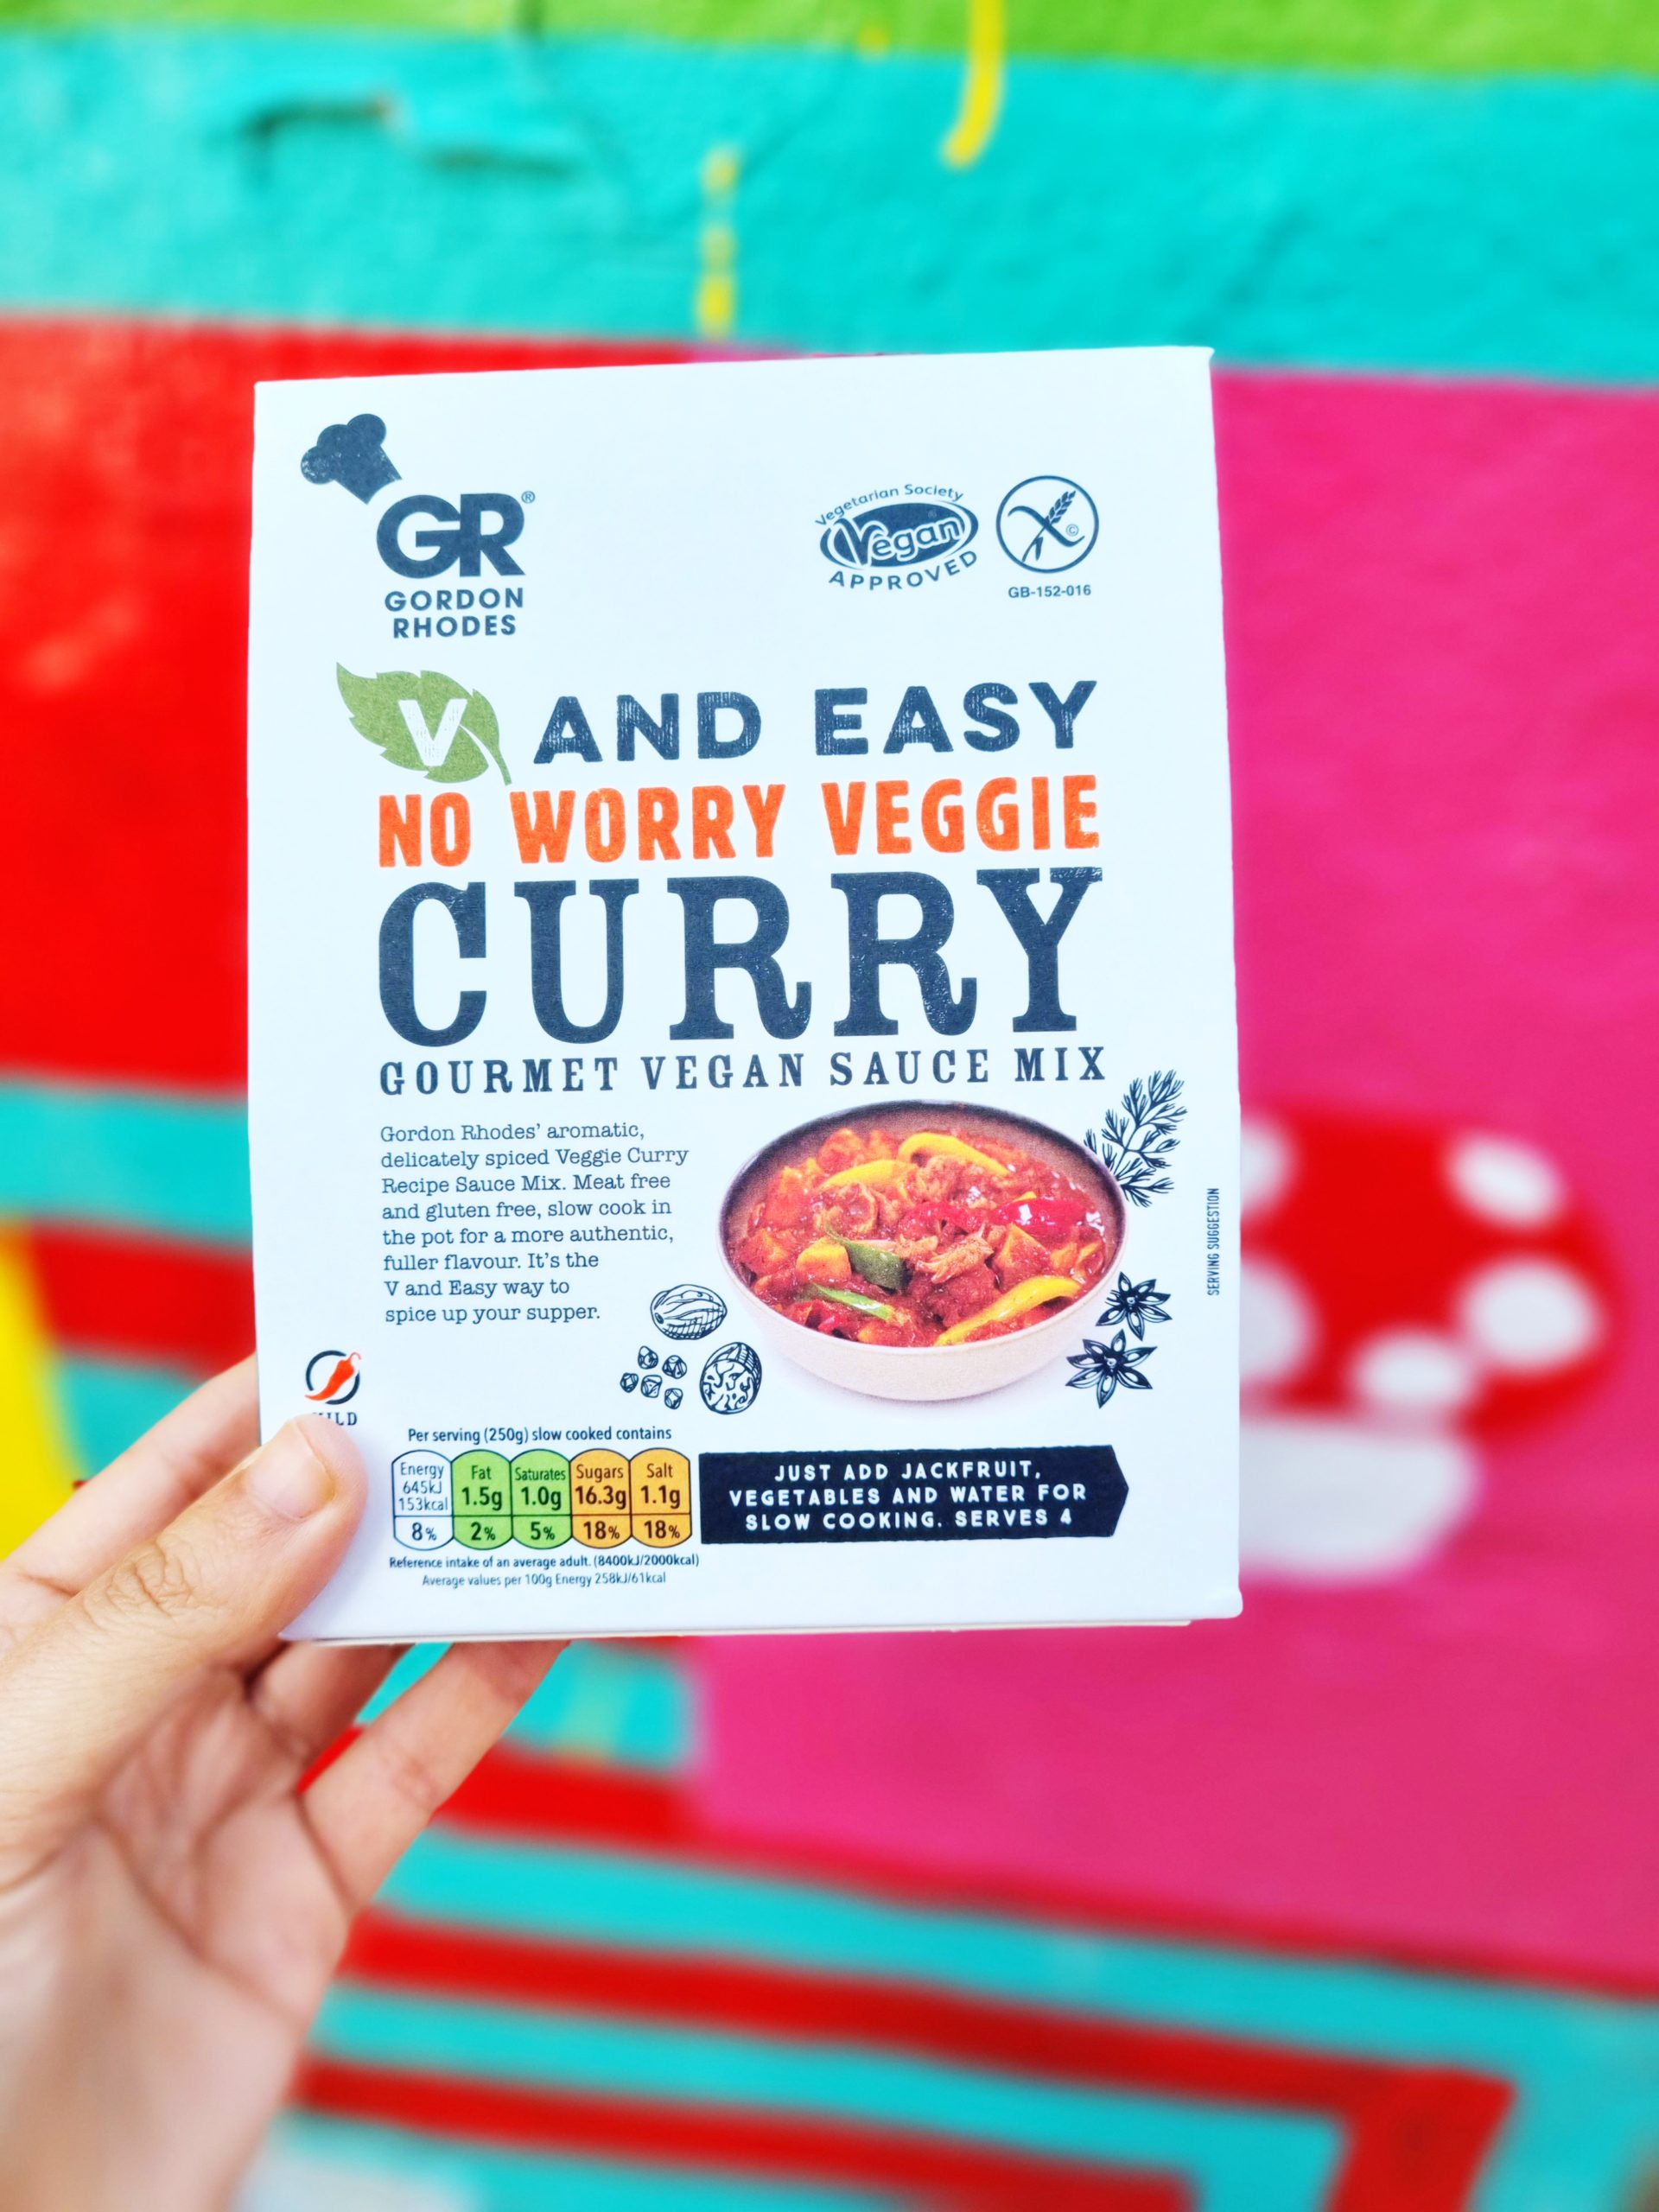 <img src="easy.jpg" alt="easy veggie curry spice mix"/> 